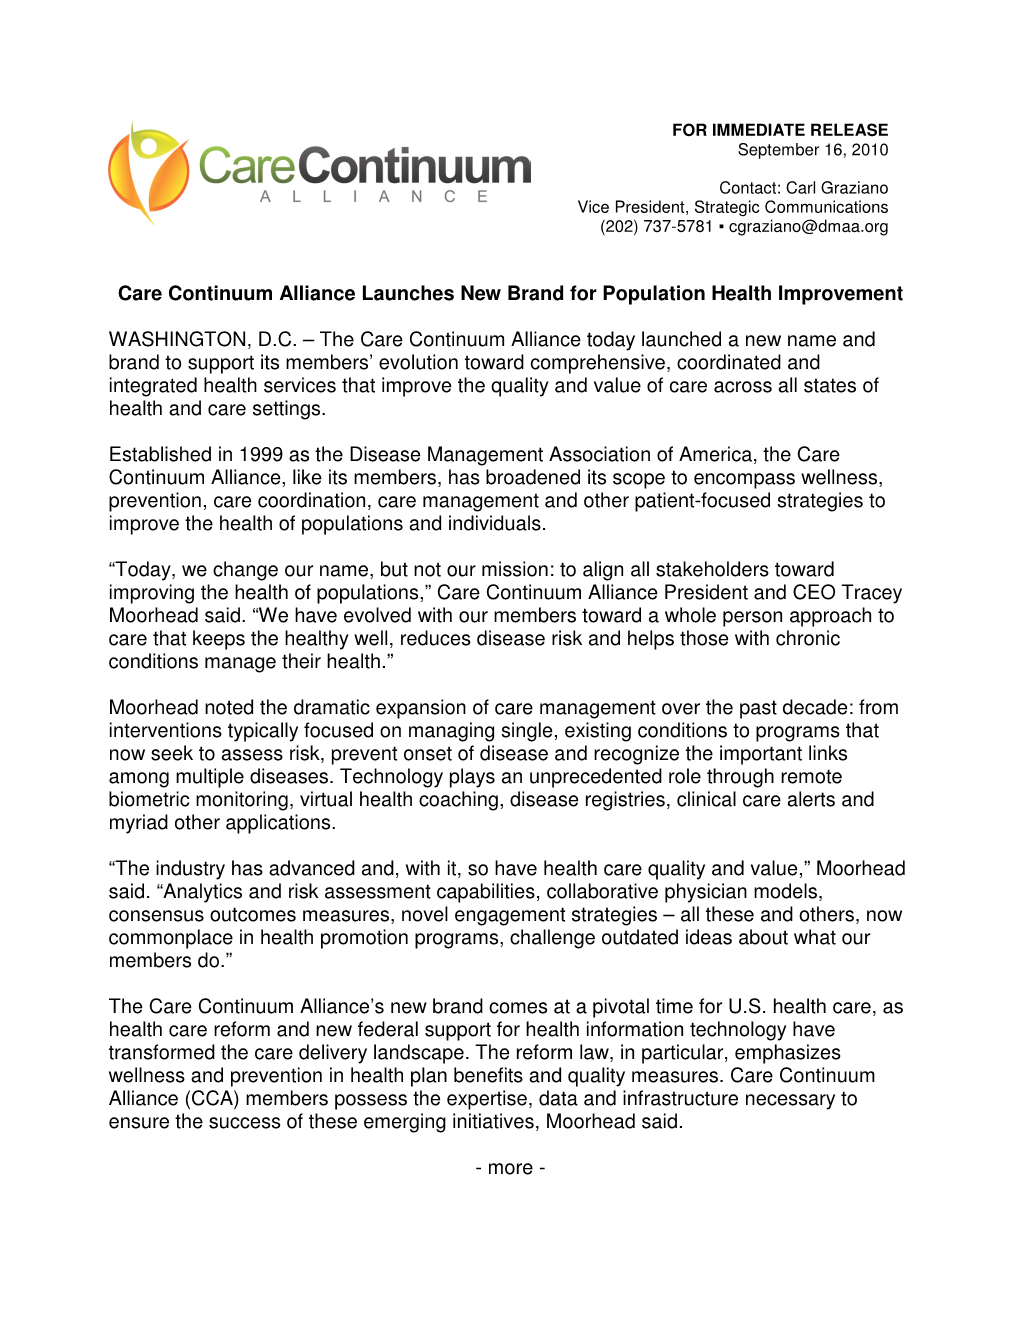 Care Continuum Alliance Launches New Brand for Population Health Improvement WASHINGTON, D.C. – the Care Continuum Alliance To